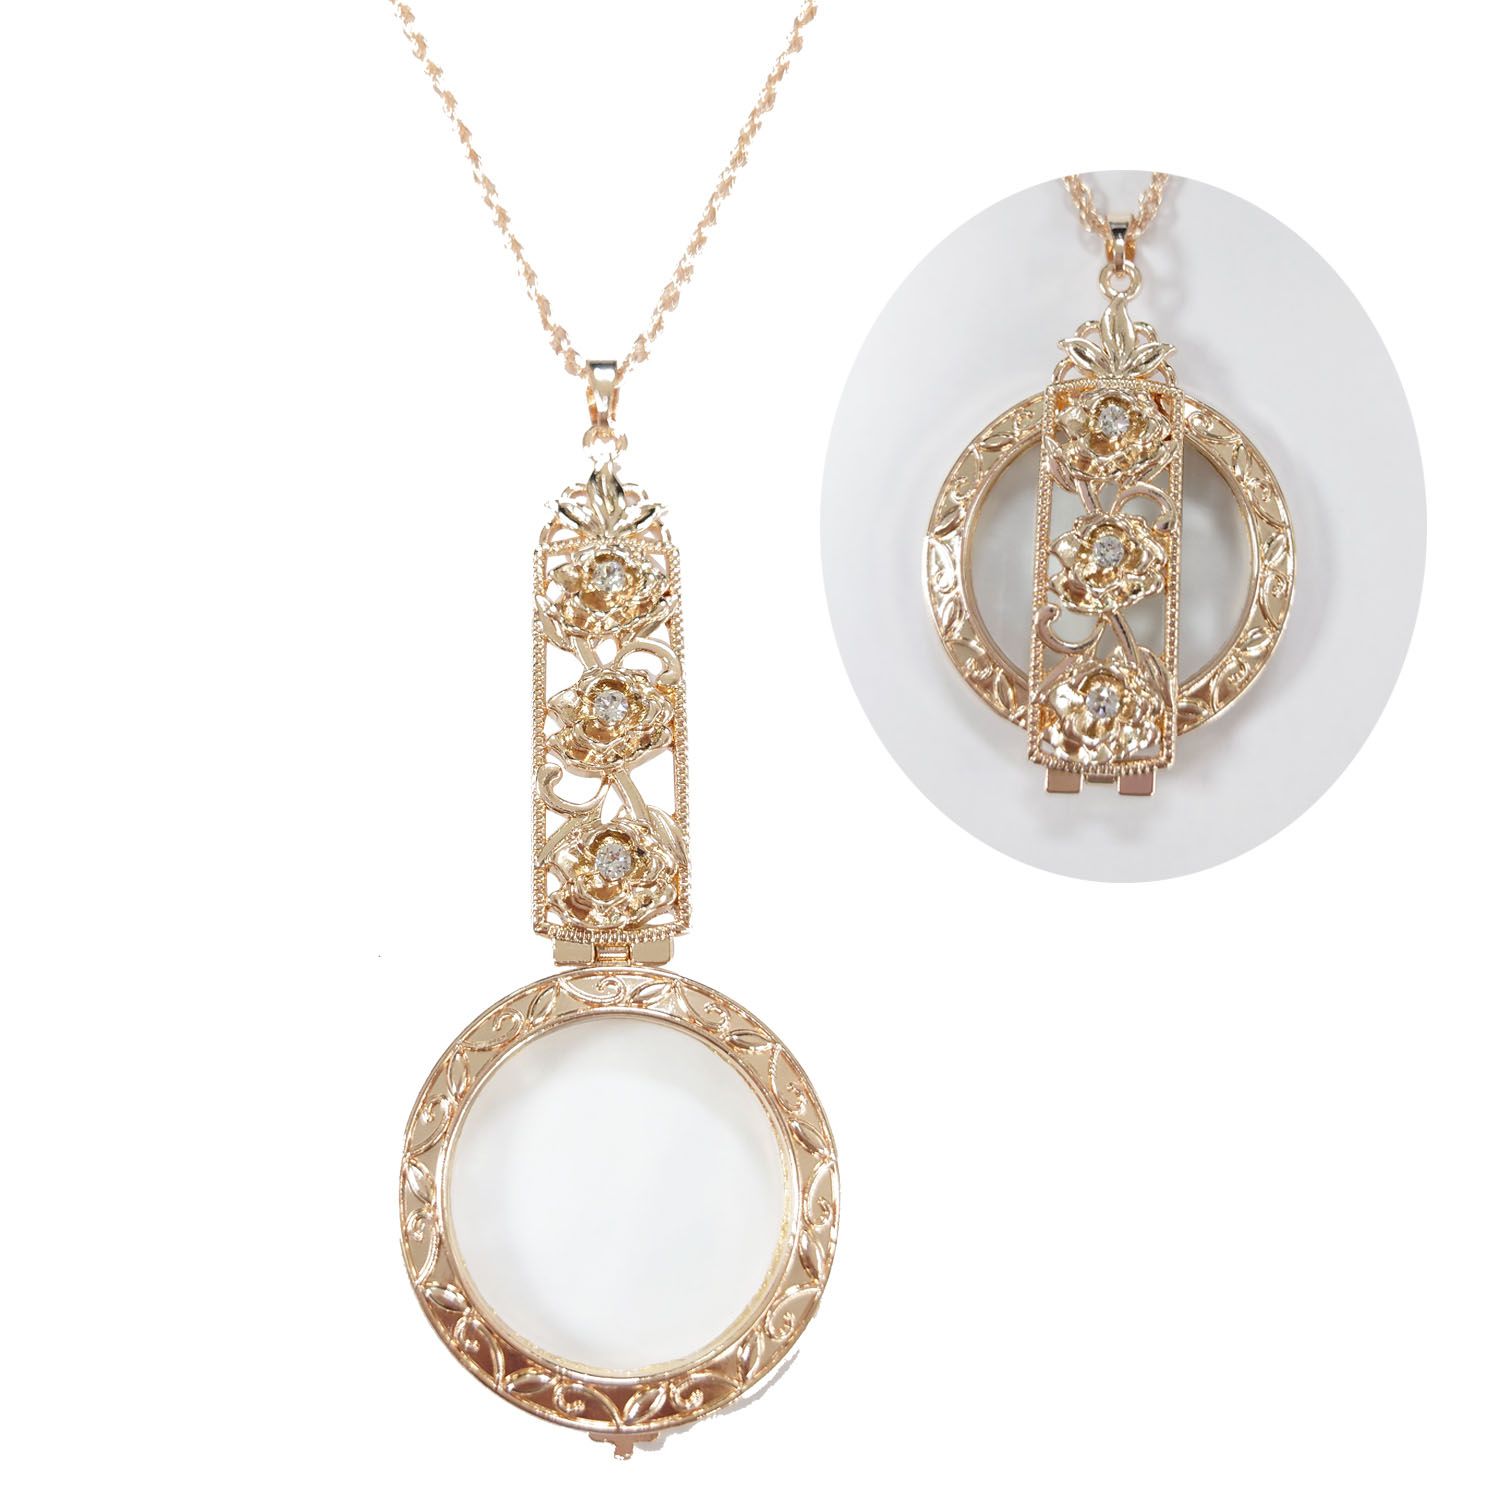 Buy Magnifying Glass LOUPE Pendant, Loupe Necklace, Magnifying Glass  Necklace, Gift for Women Online in India - Etsy